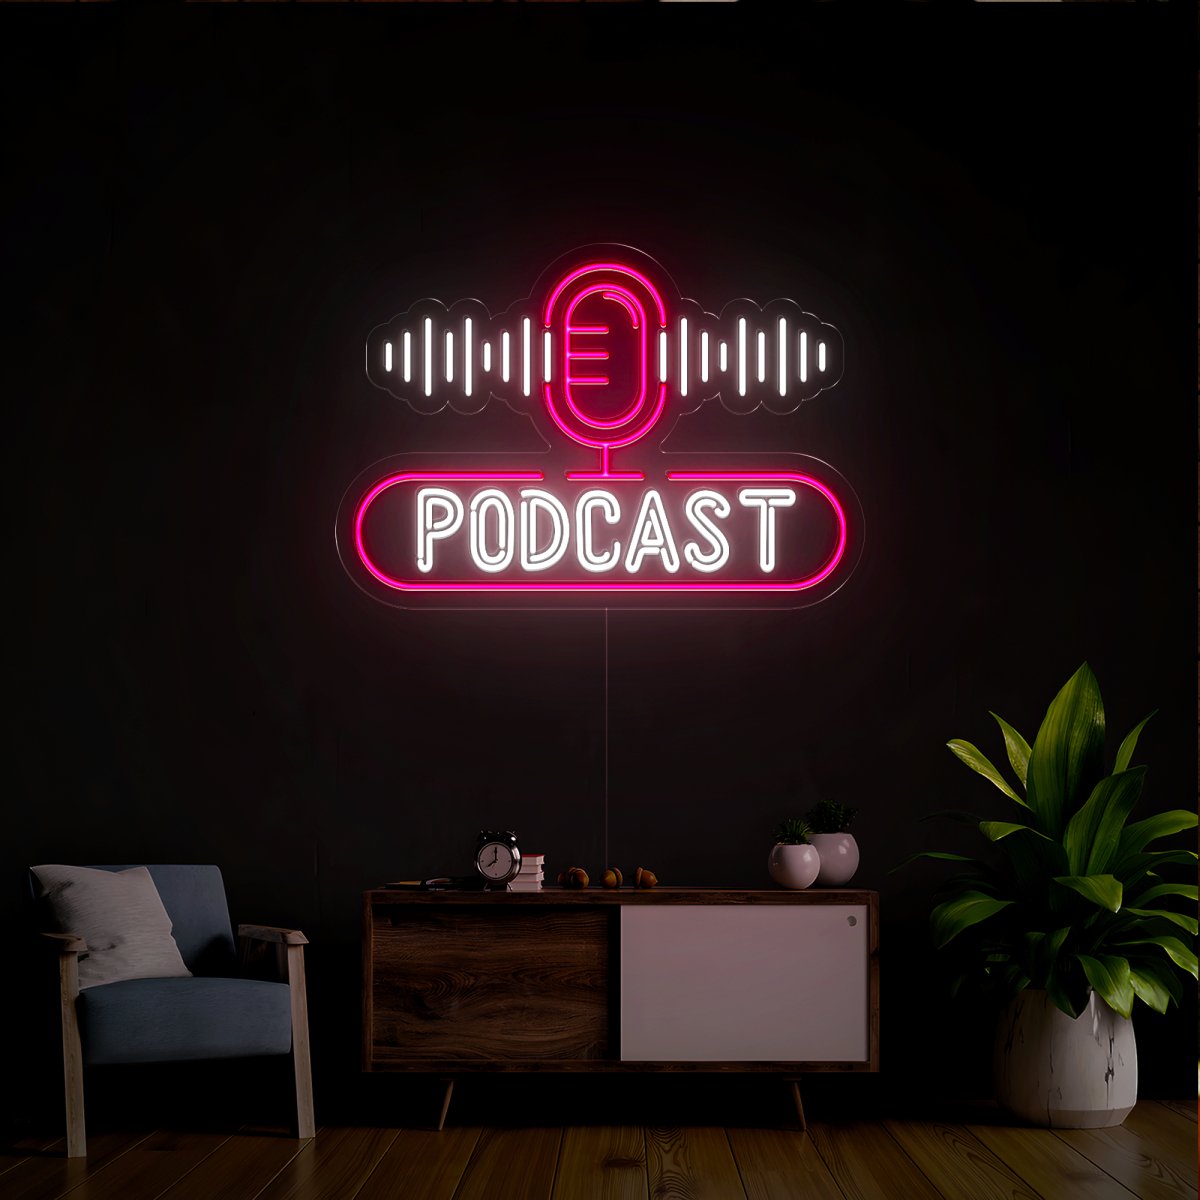 Podcast Neon Sign - Reels Custom